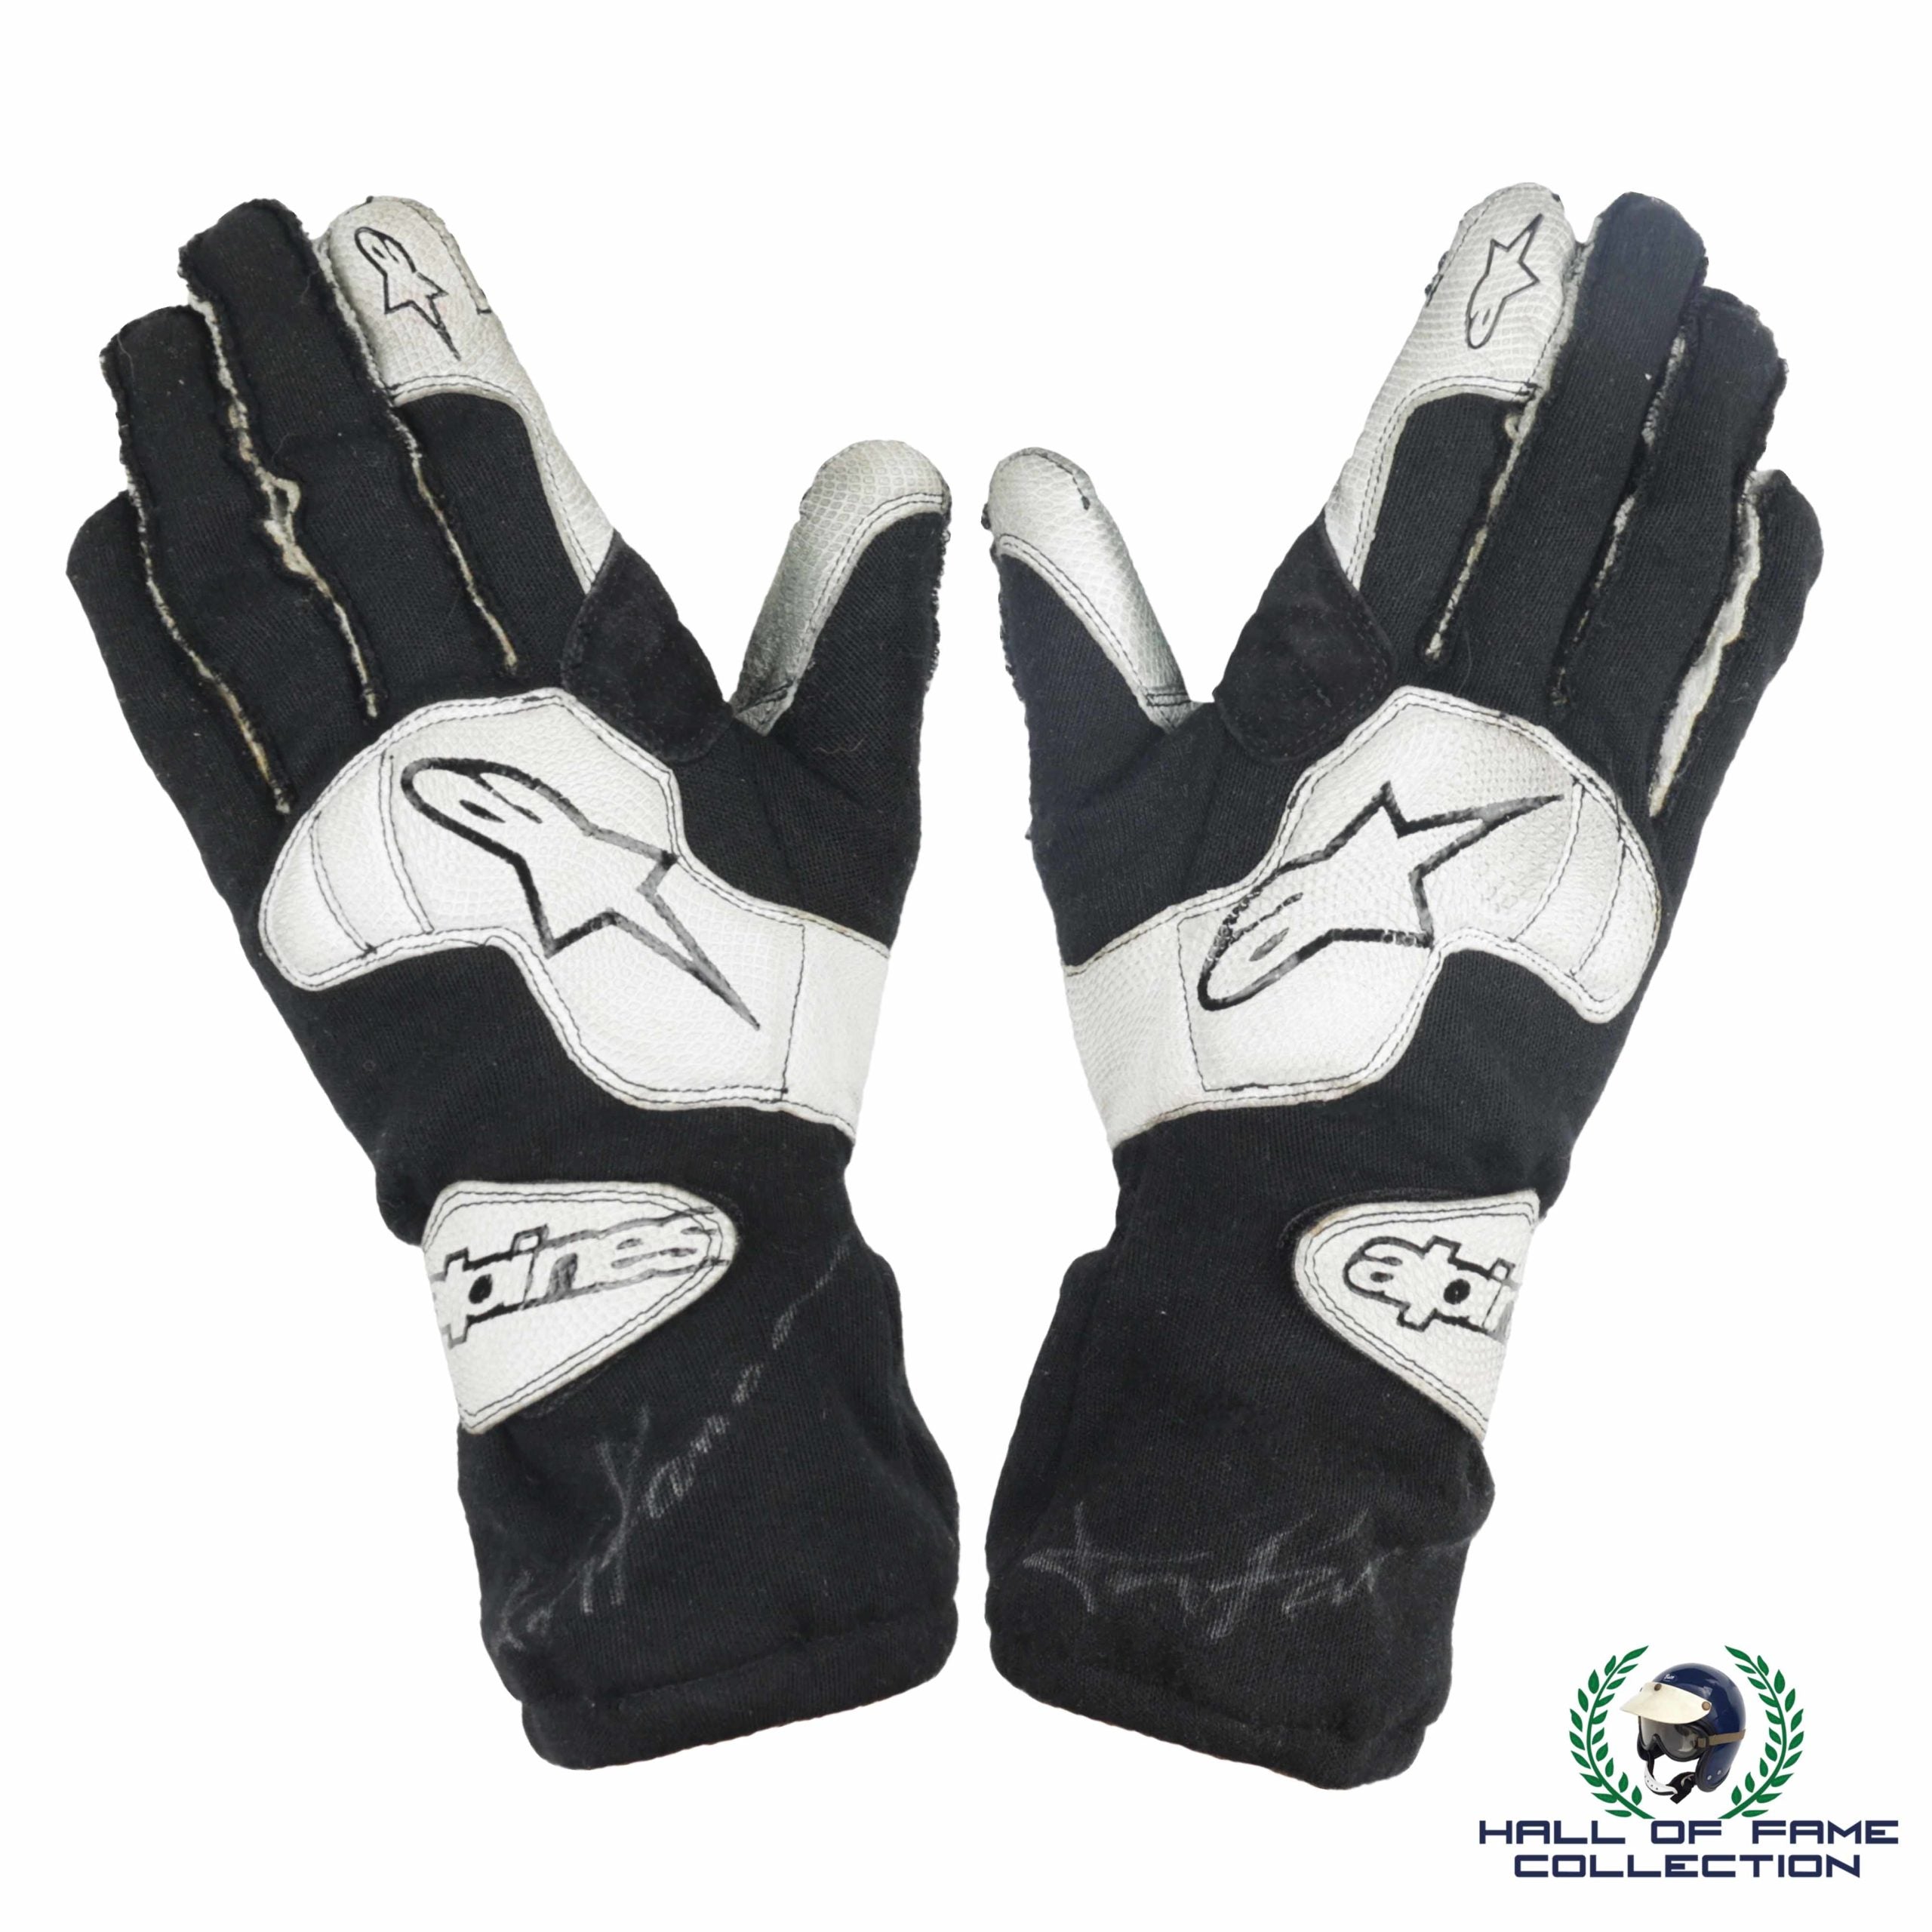 2002 Tony Kanaan Signed Race Used Mo Nunn Racing Alpinestars CART IndyCar Gloves